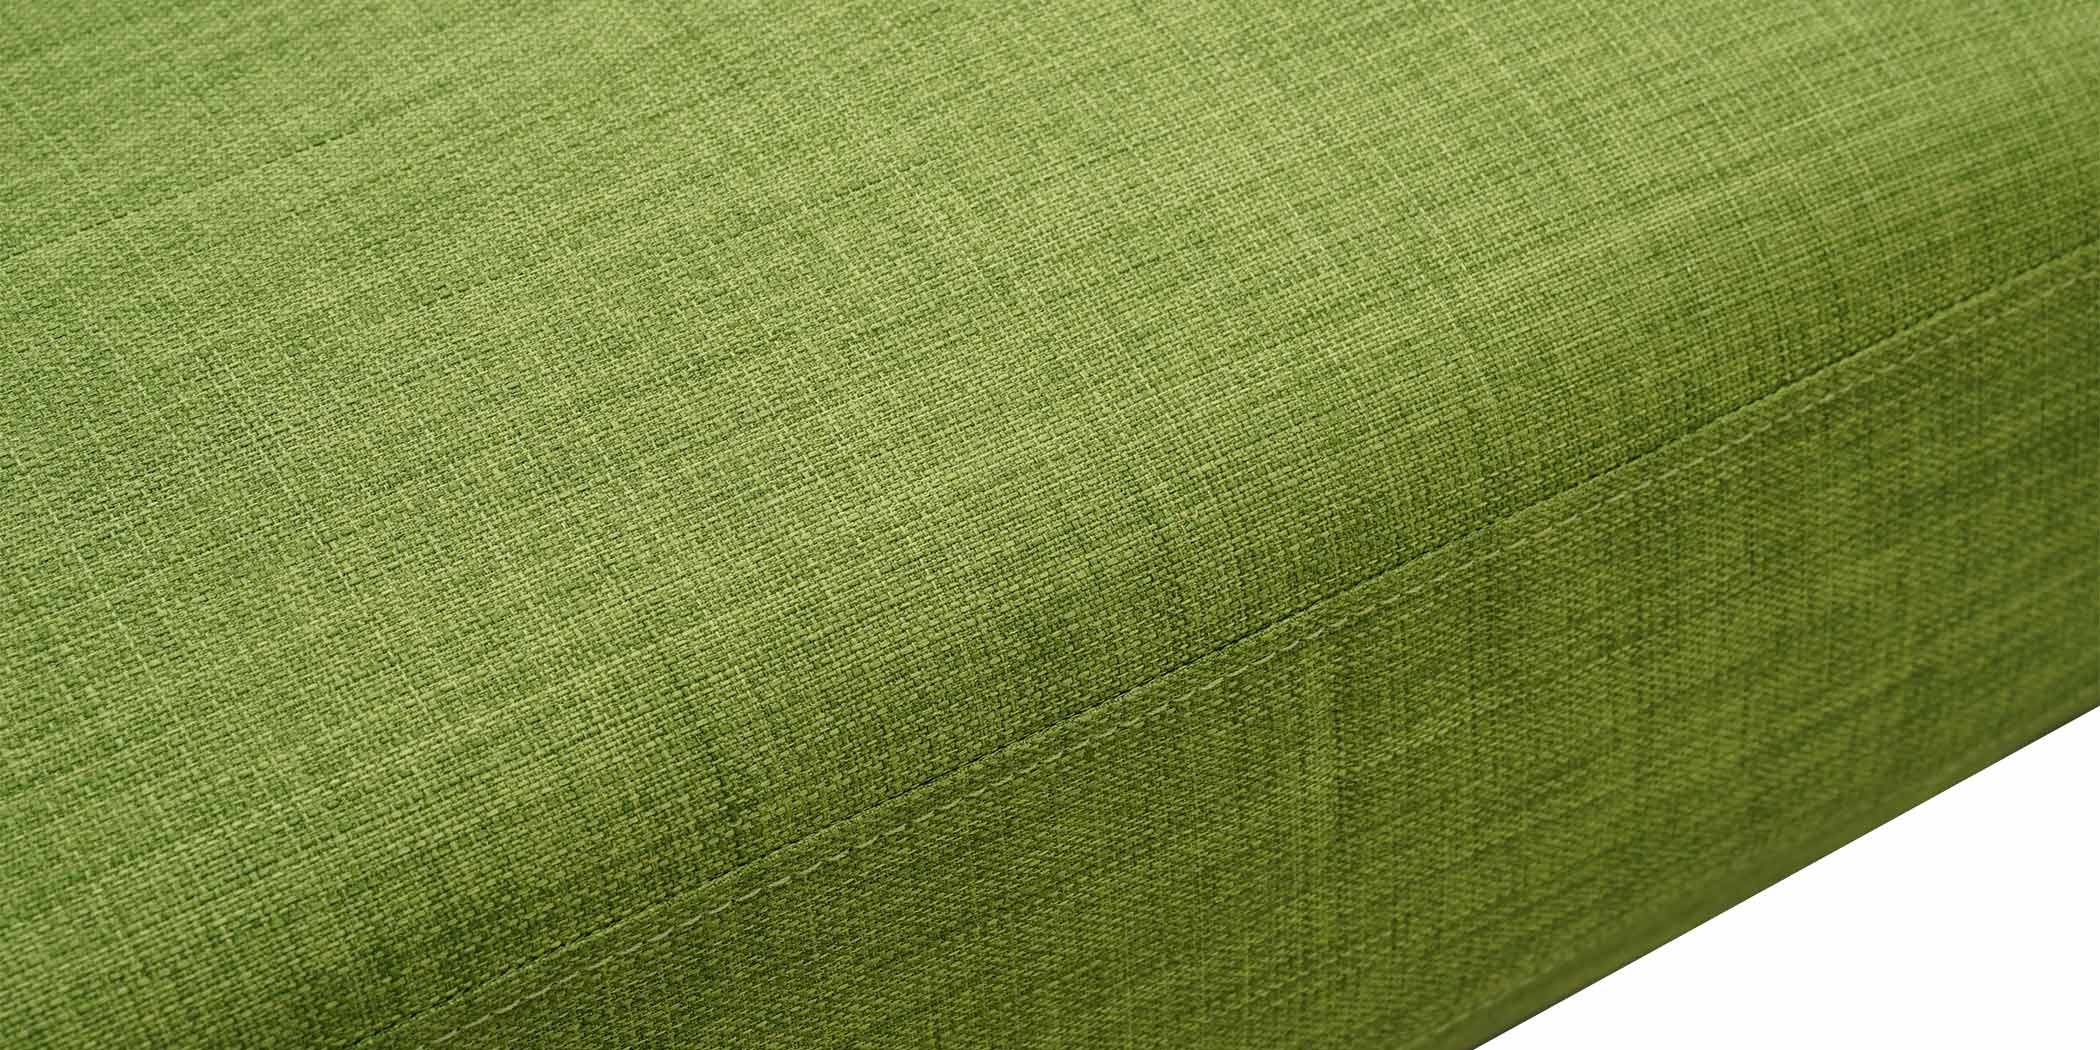 Dakota Sofa 3+2 in Fabric Milford Grass Col